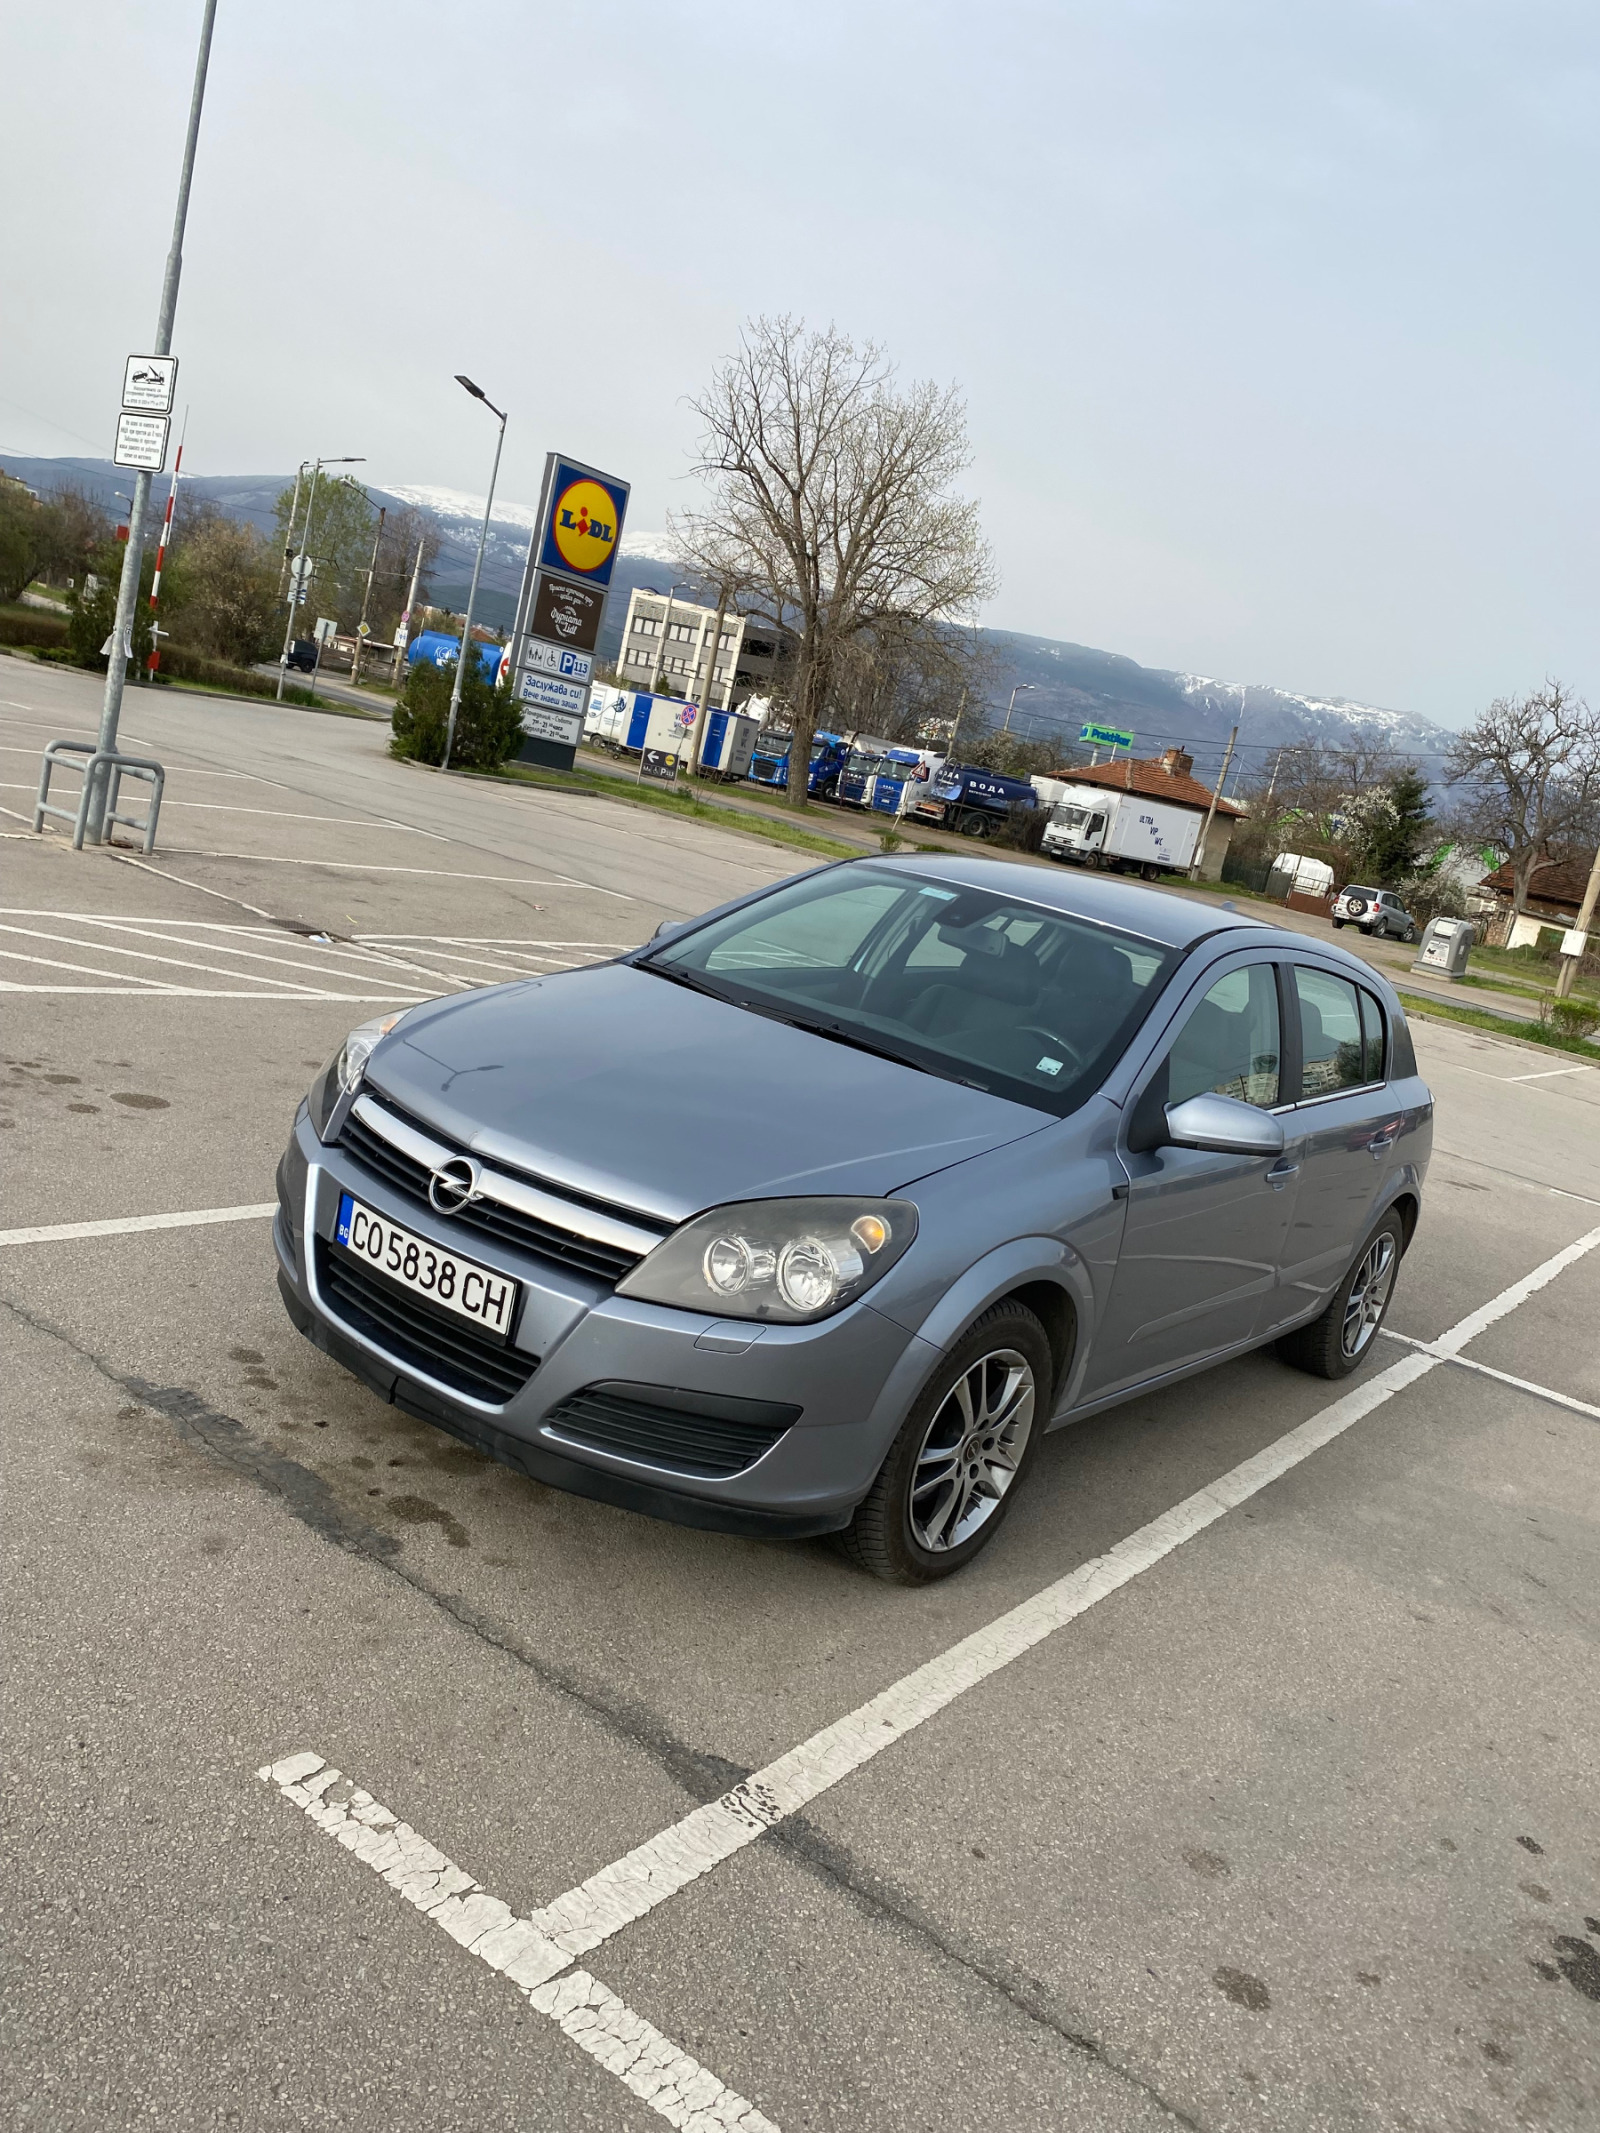 Opel Astra 1.9 CDTI 150hp - изображение 1